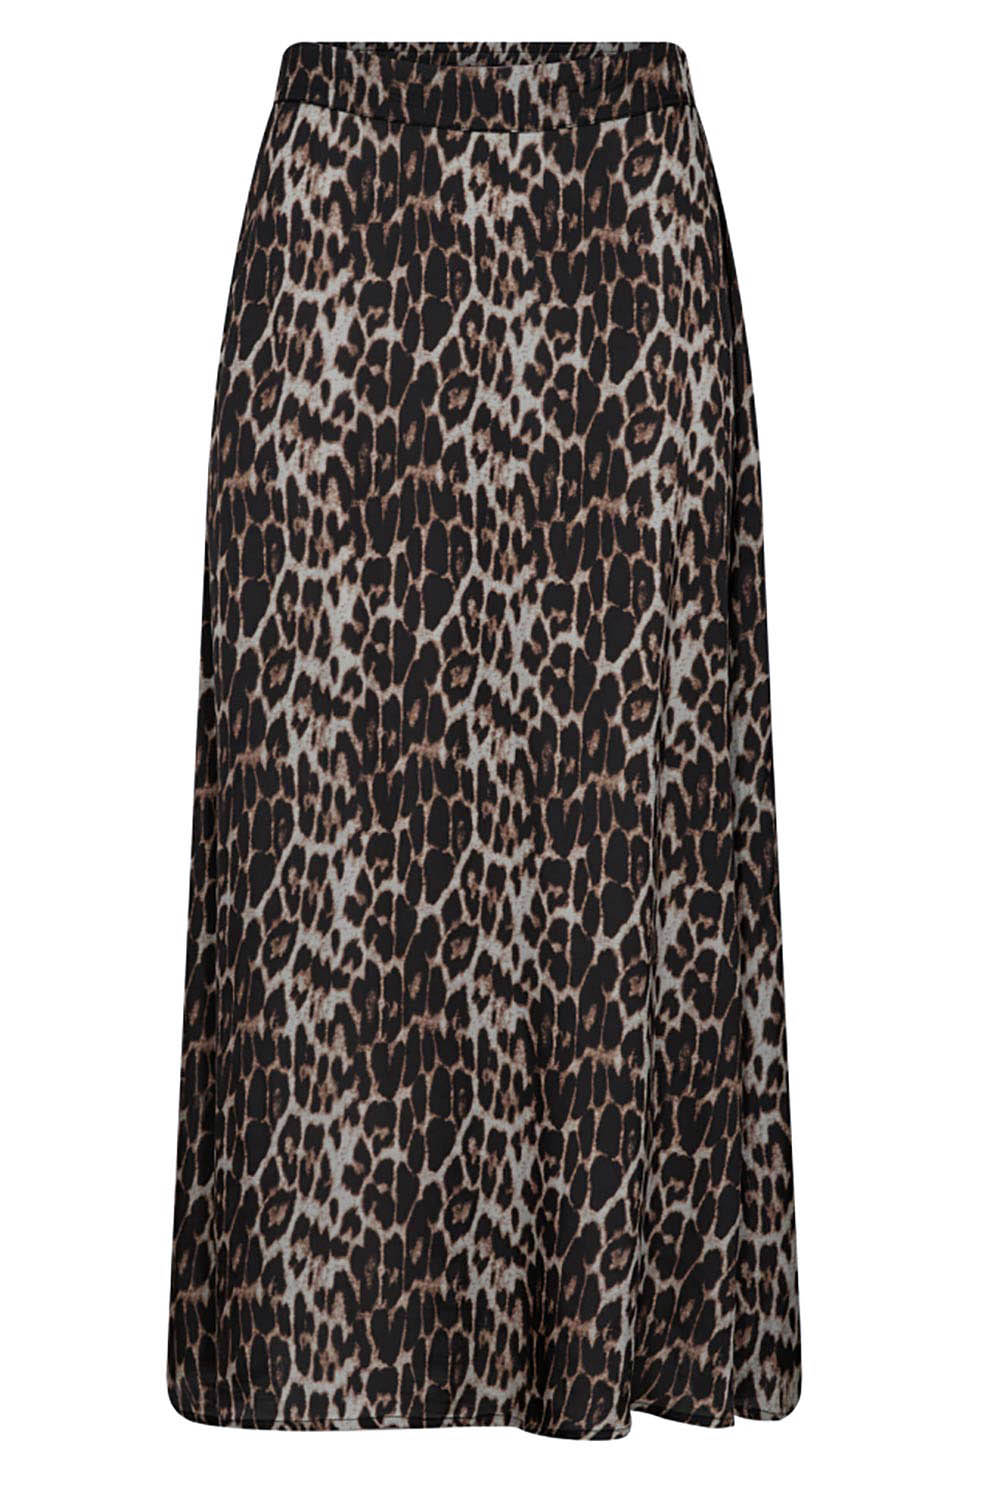 Co'Couture Leopard print maxi-rok LeoLeo dierenprint